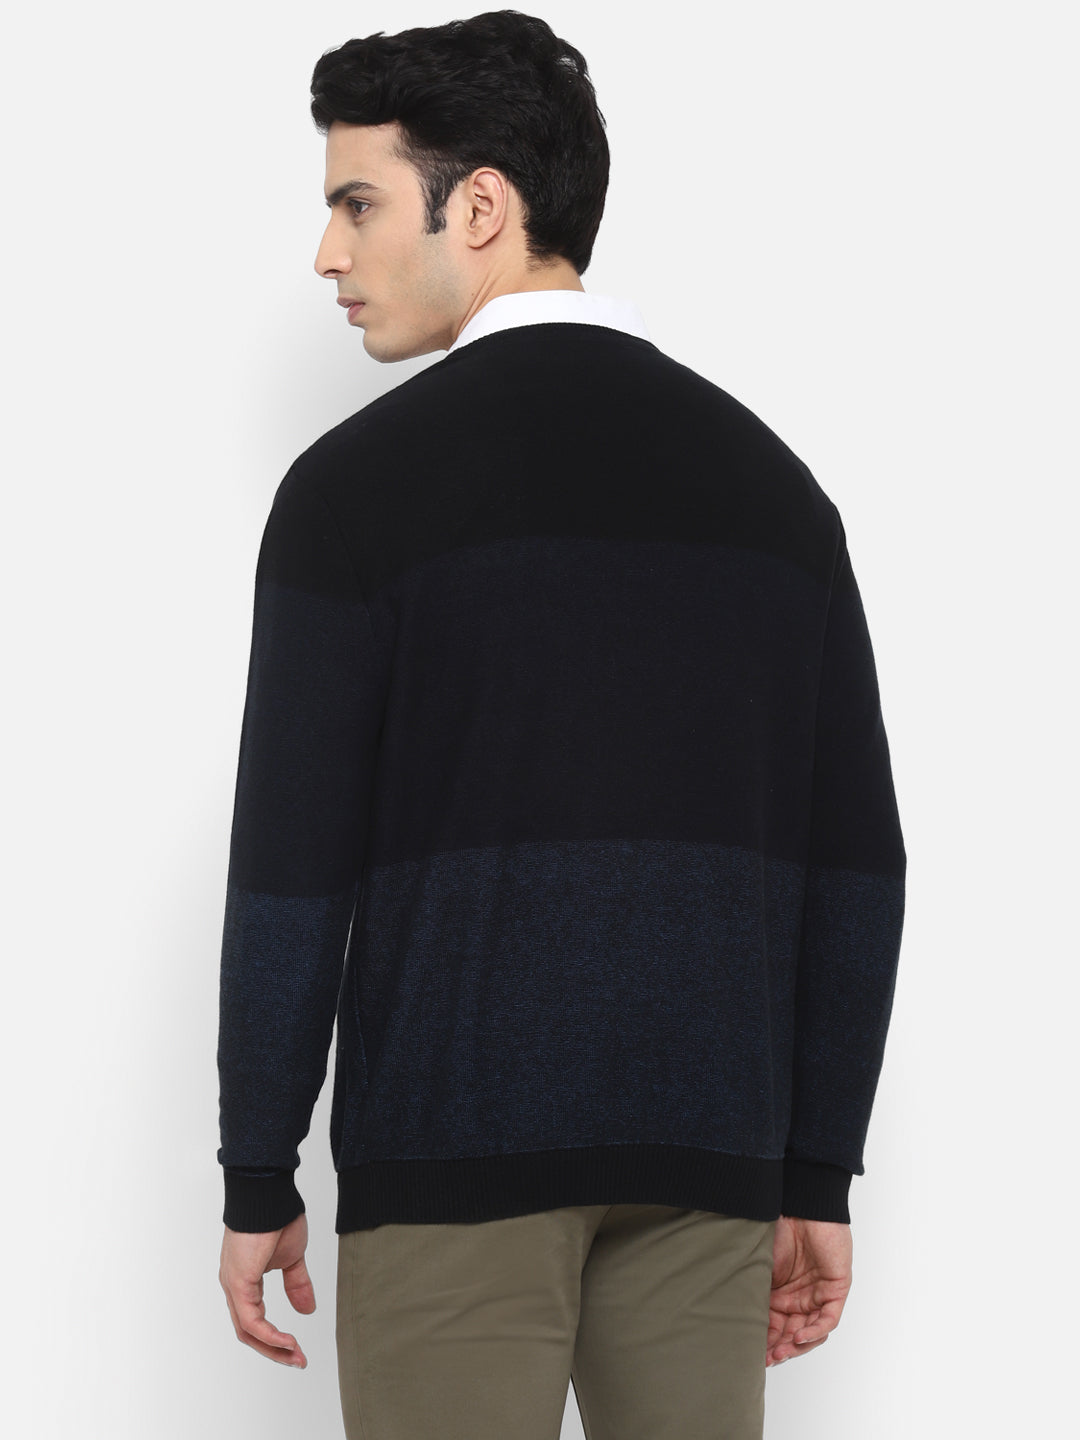 Solid Navy Blue Full Sleeve Sweater for Men